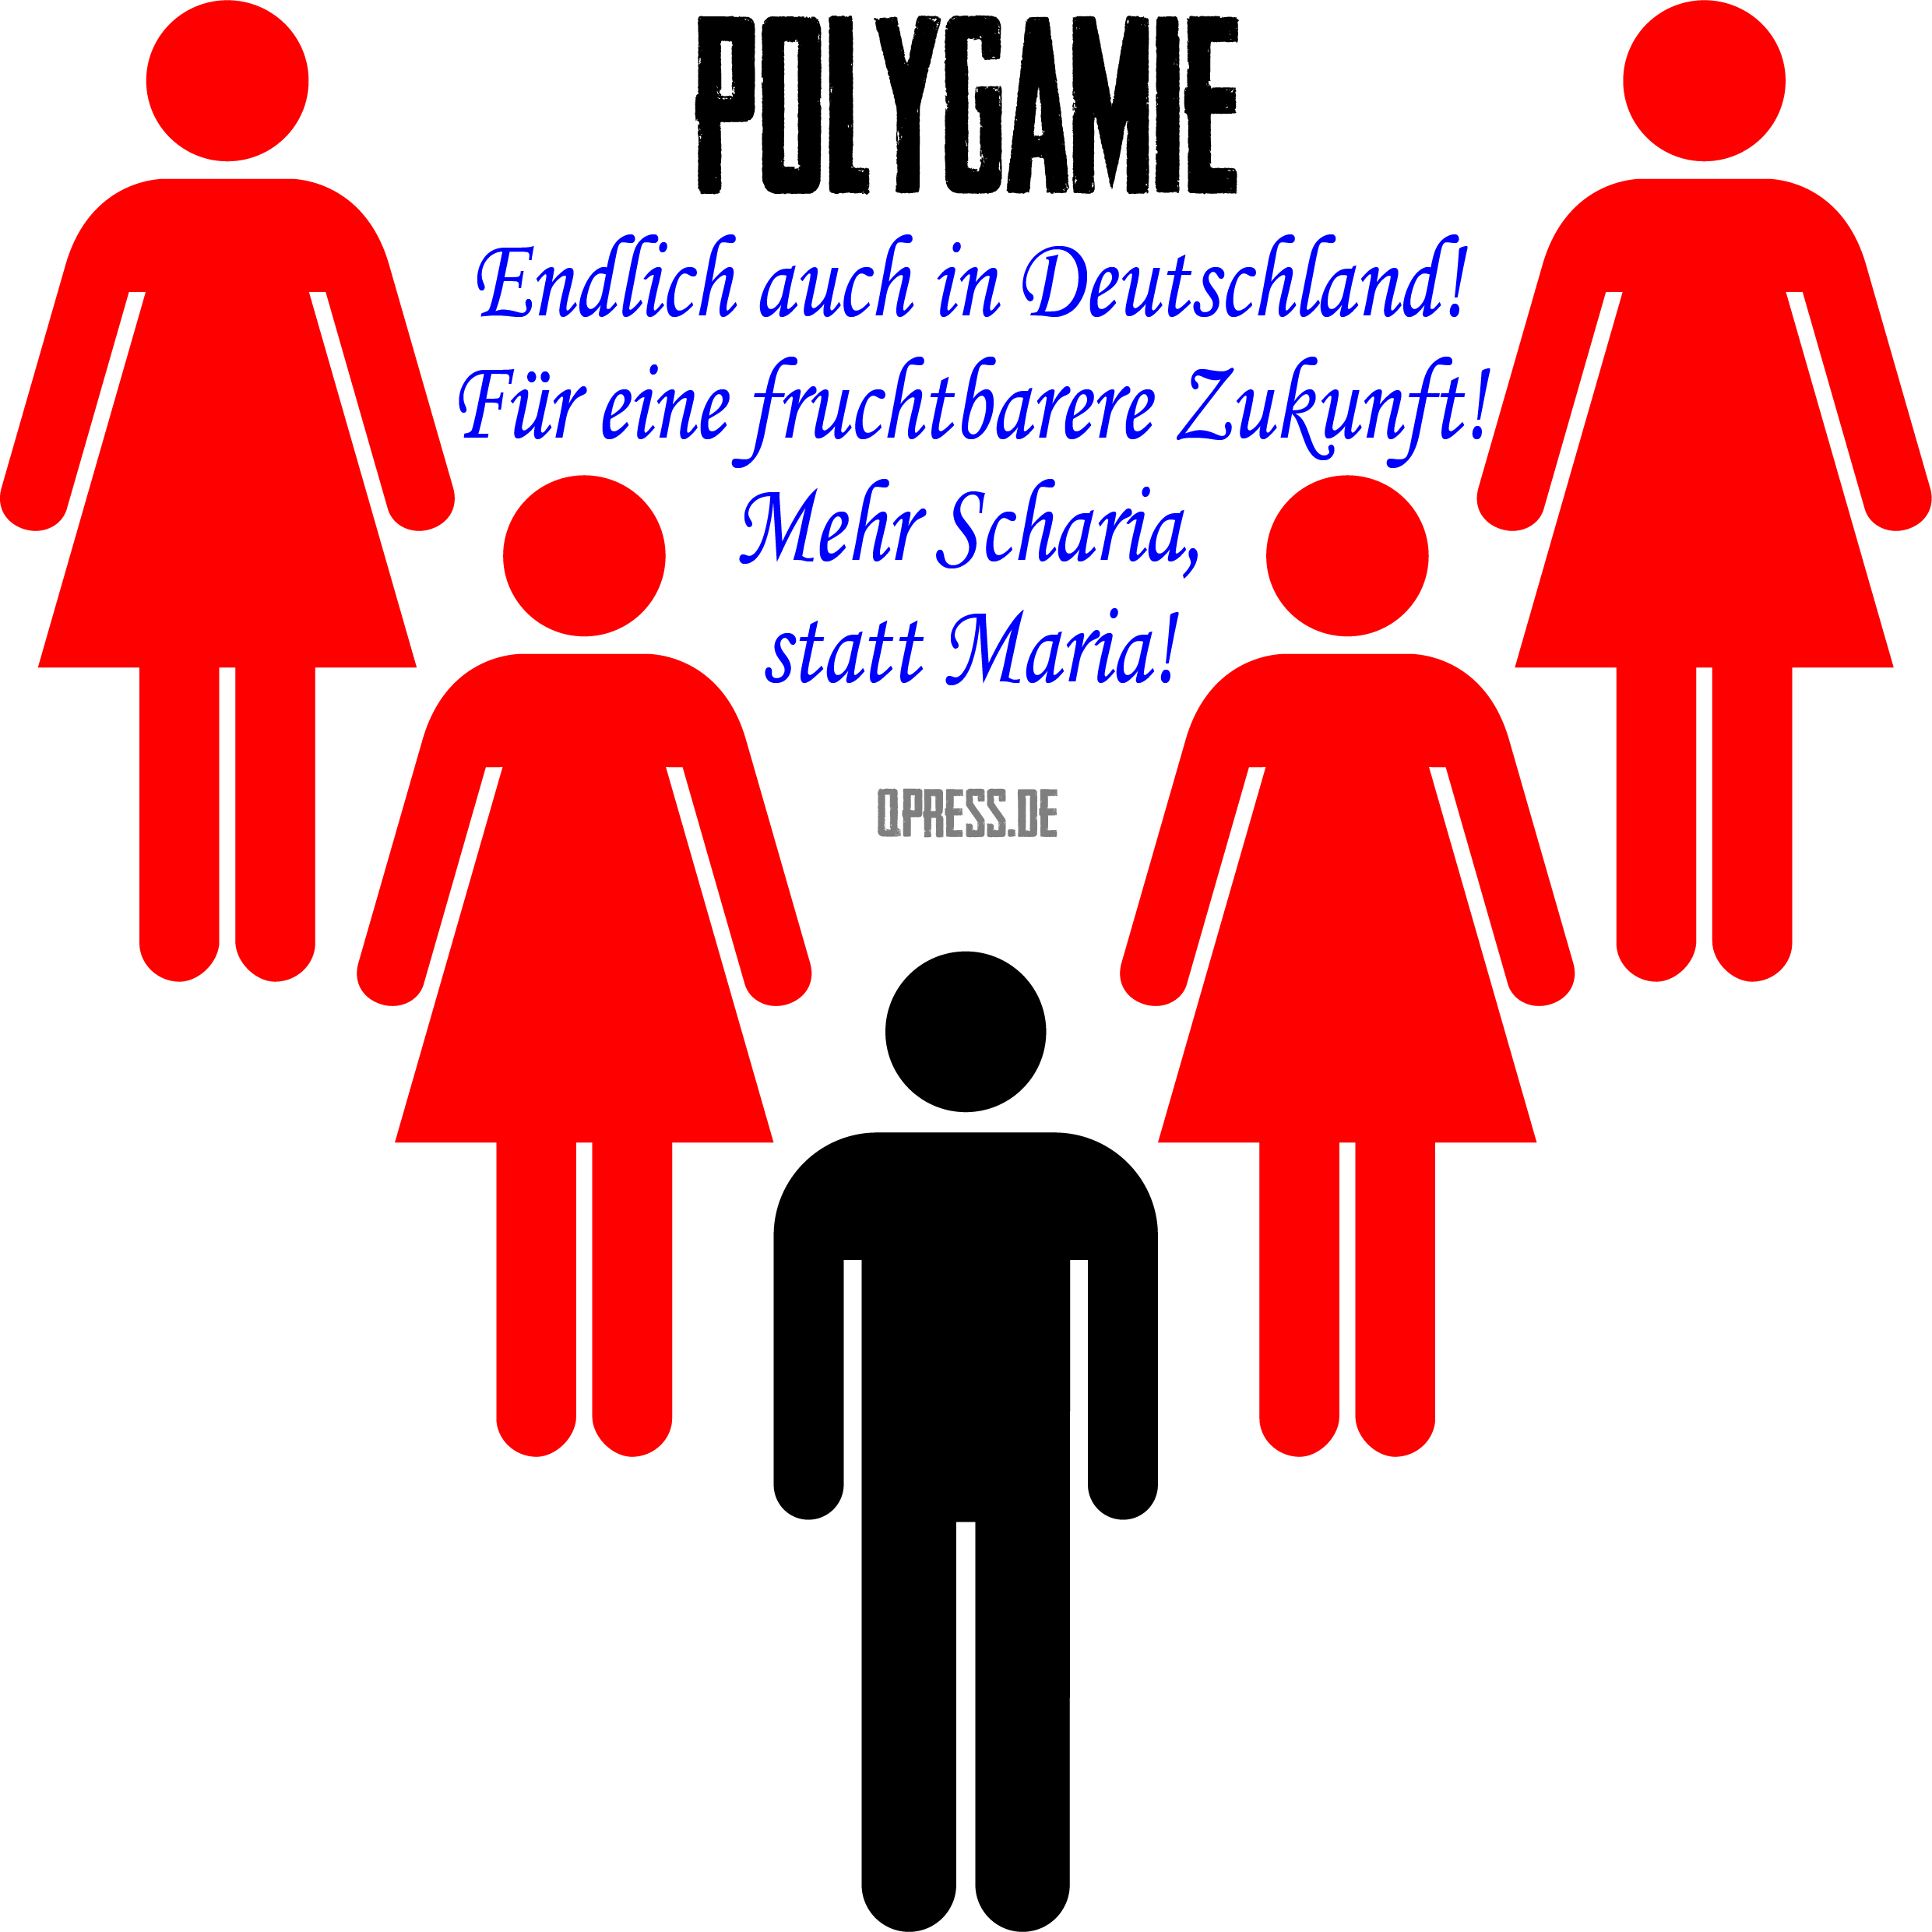 Polygamie polygamy made easy harem Kultur Scharia-01